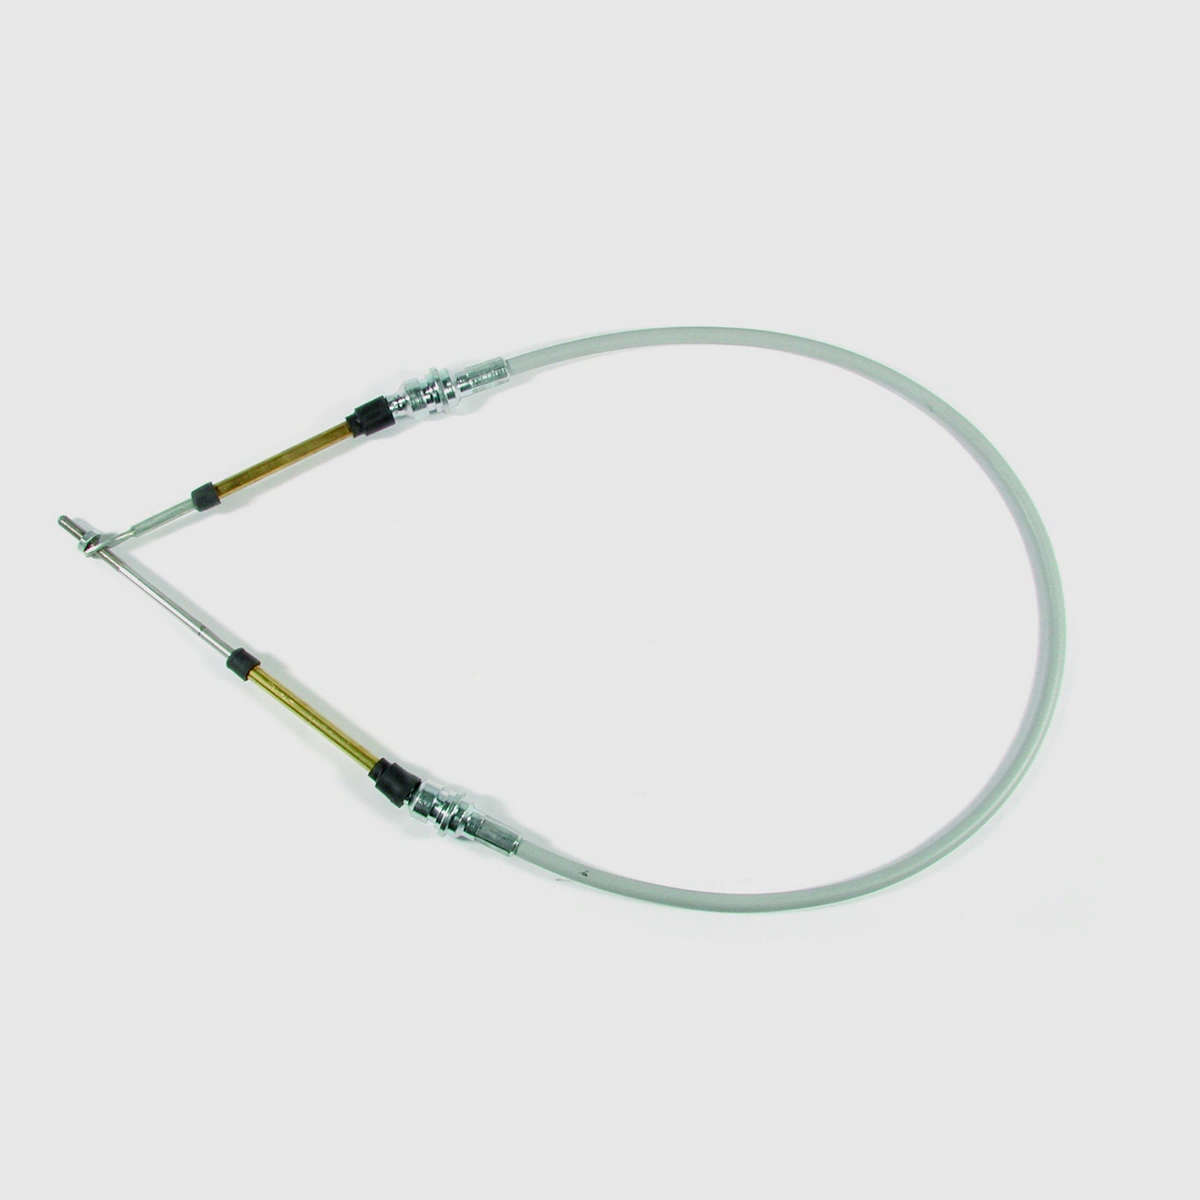 Hurst 500-0023 Shifter Cable, 3 ft Long, Stainless Cable, Plastic Liner, Gray, Hurst Auto Stick 3/Quarter Stick / Quarter Stick 2, Each